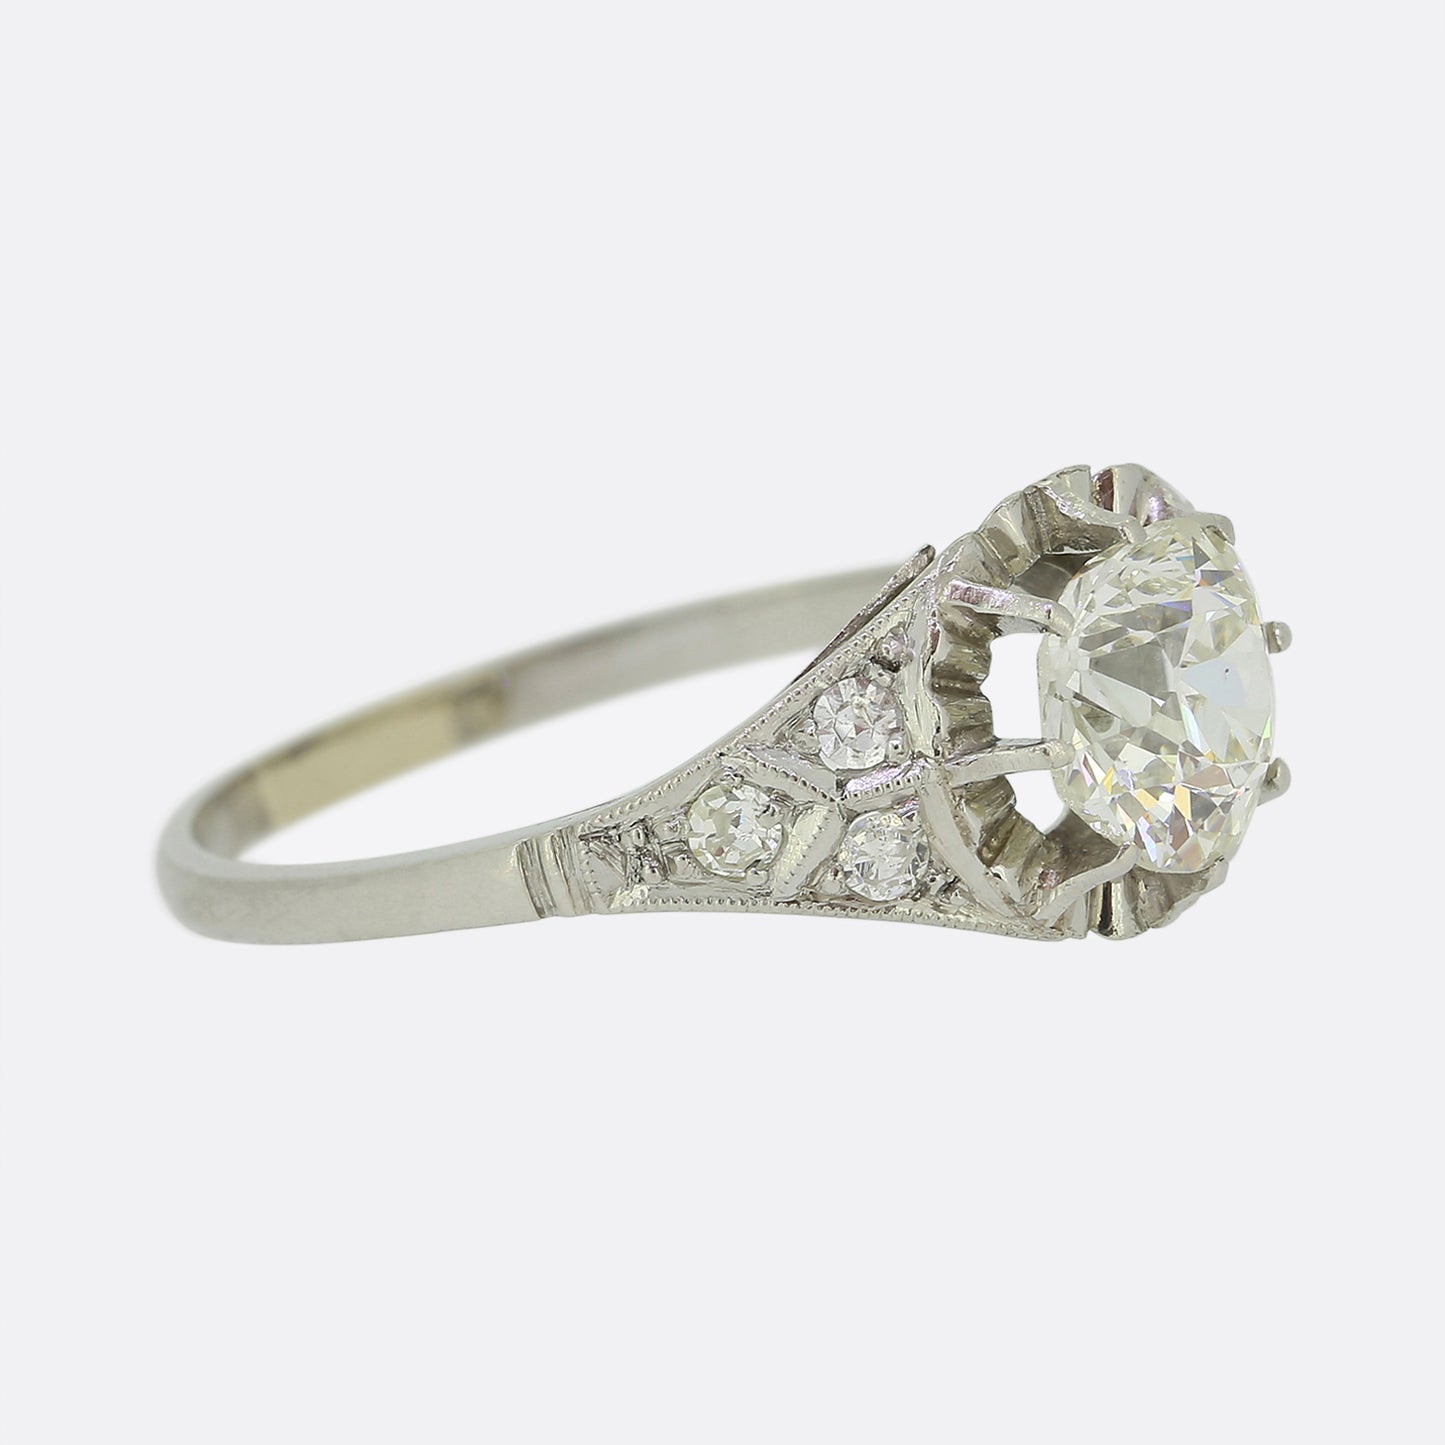 Art Deco 1.00 Carat Diamond Ring